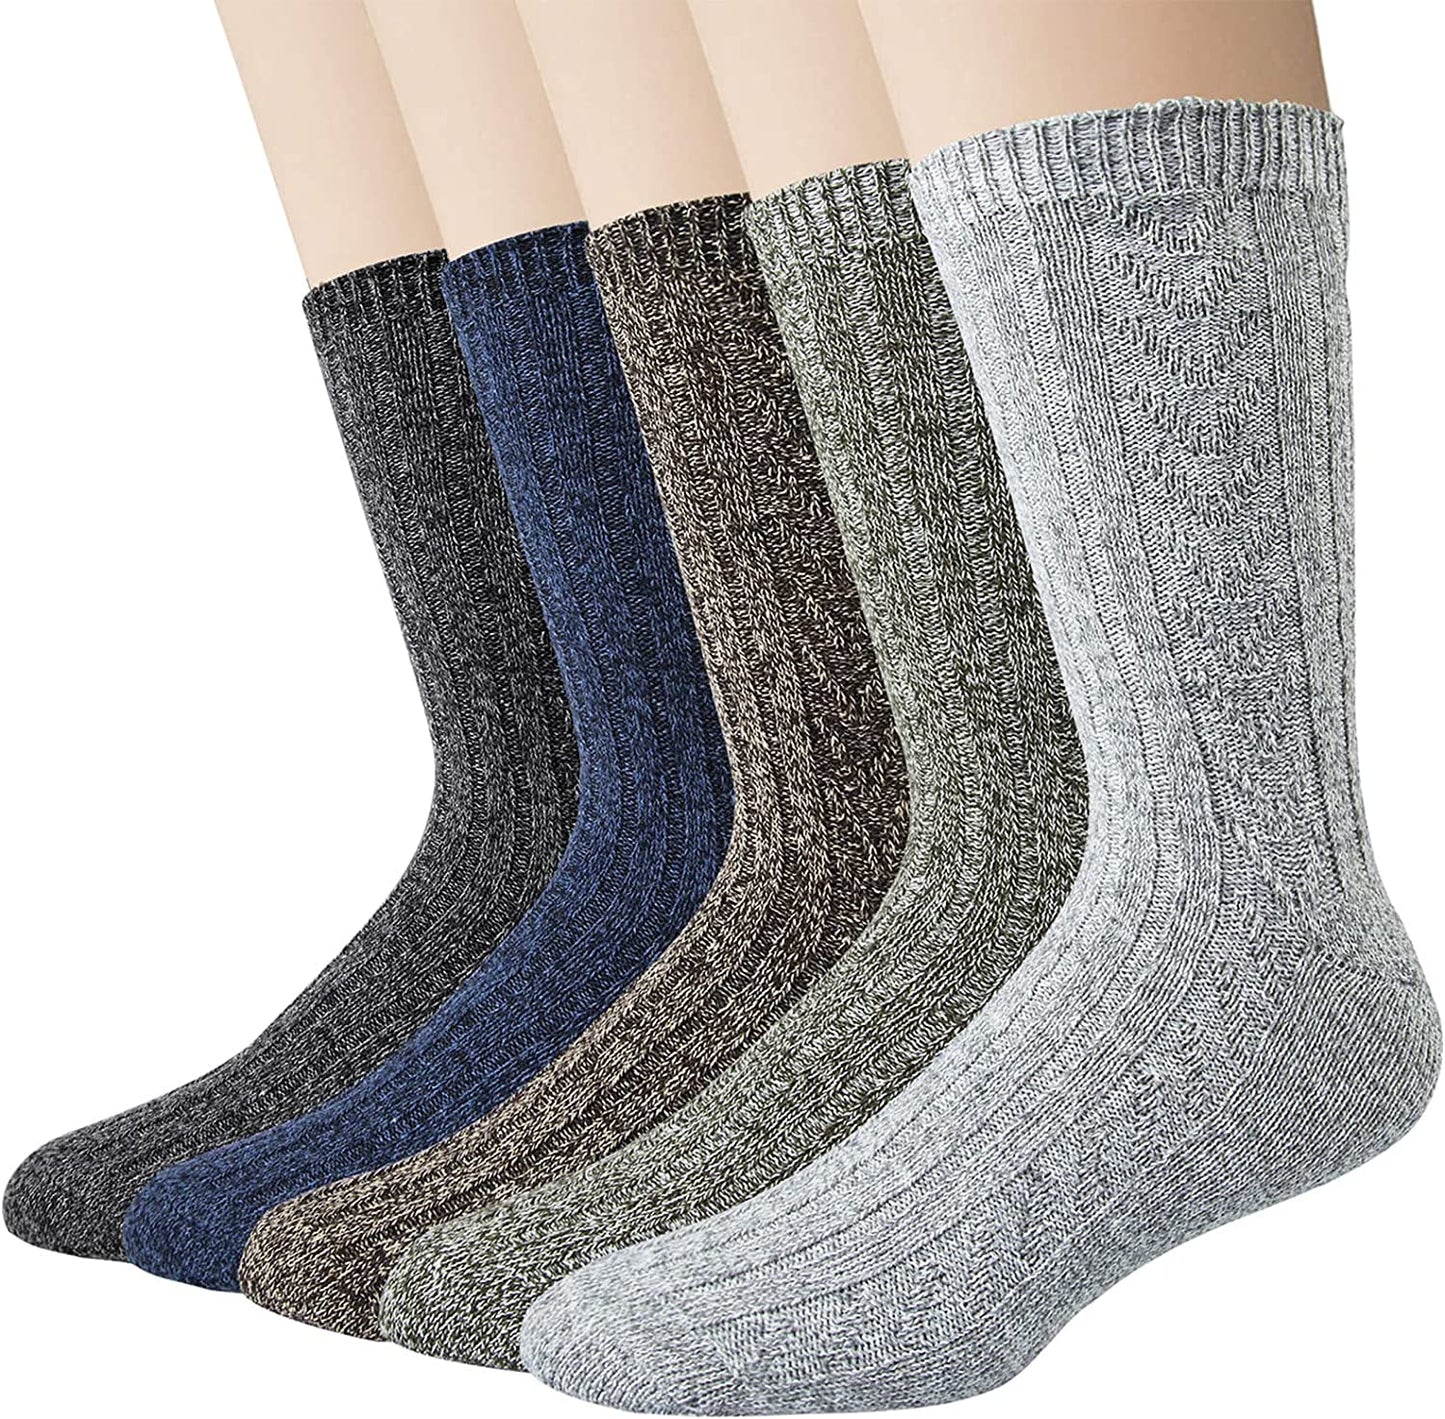 5 Pairs Mens Wool Socks Winter Warm Thick Socks Knit Causal Crew Socks for Men